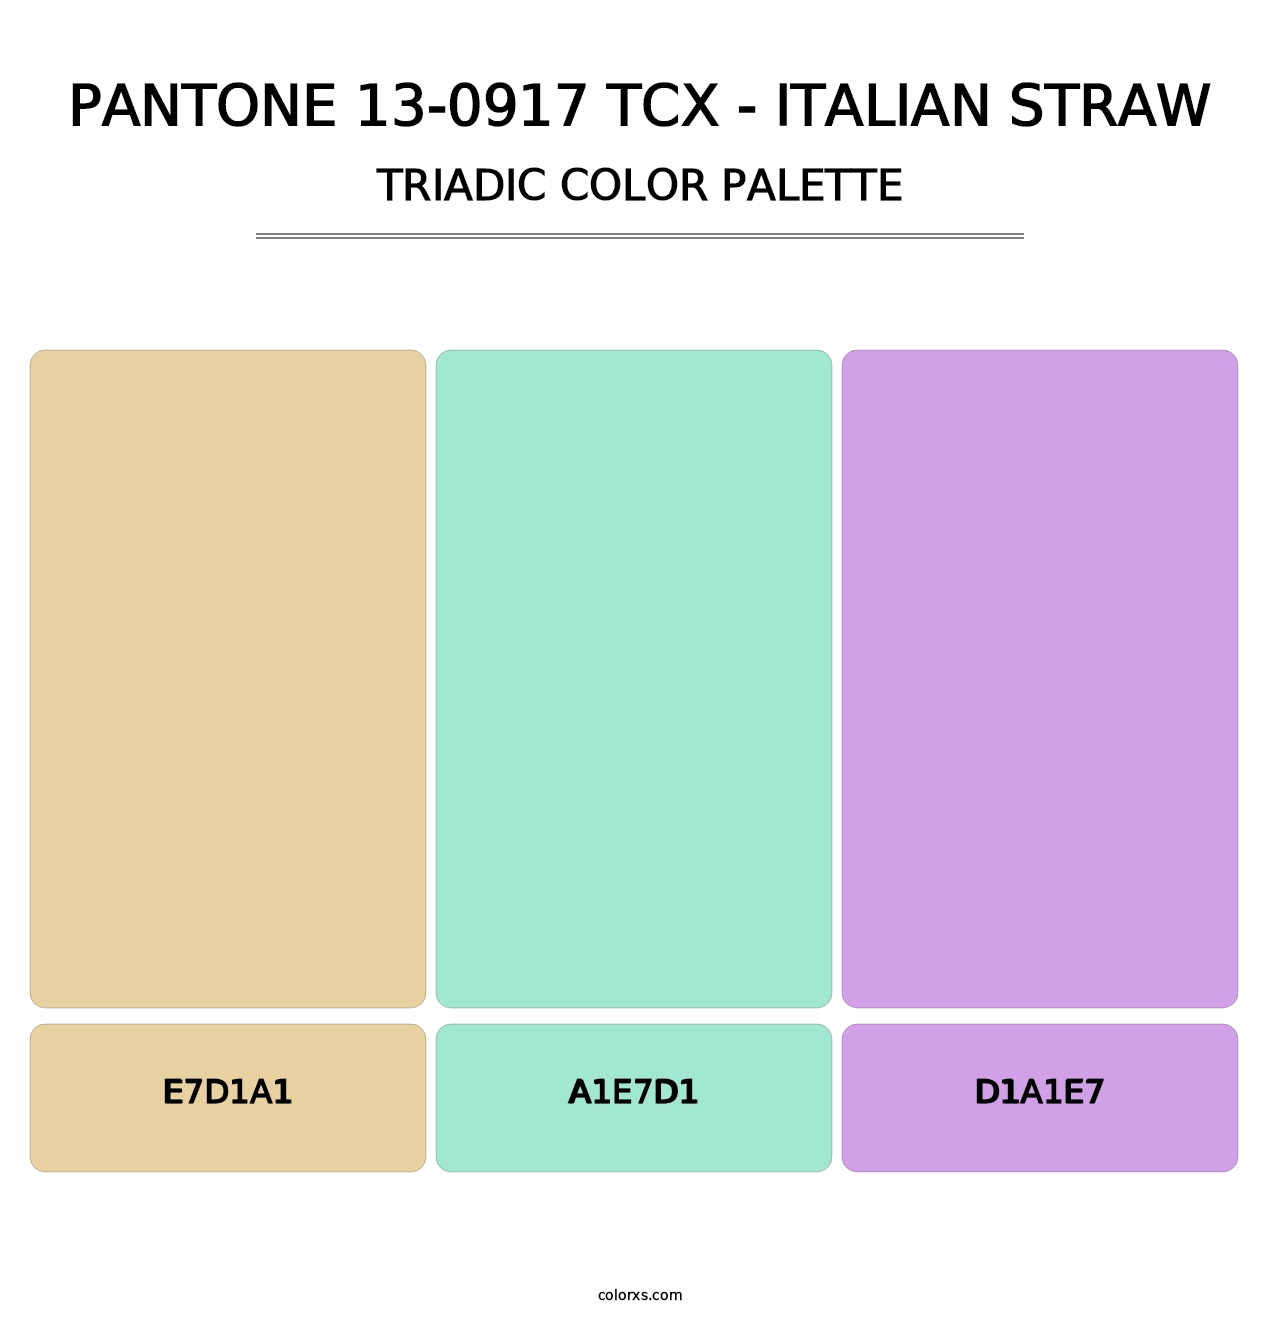 PANTONE 13-0917 TCX - Italian Straw - Triadic Color Palette